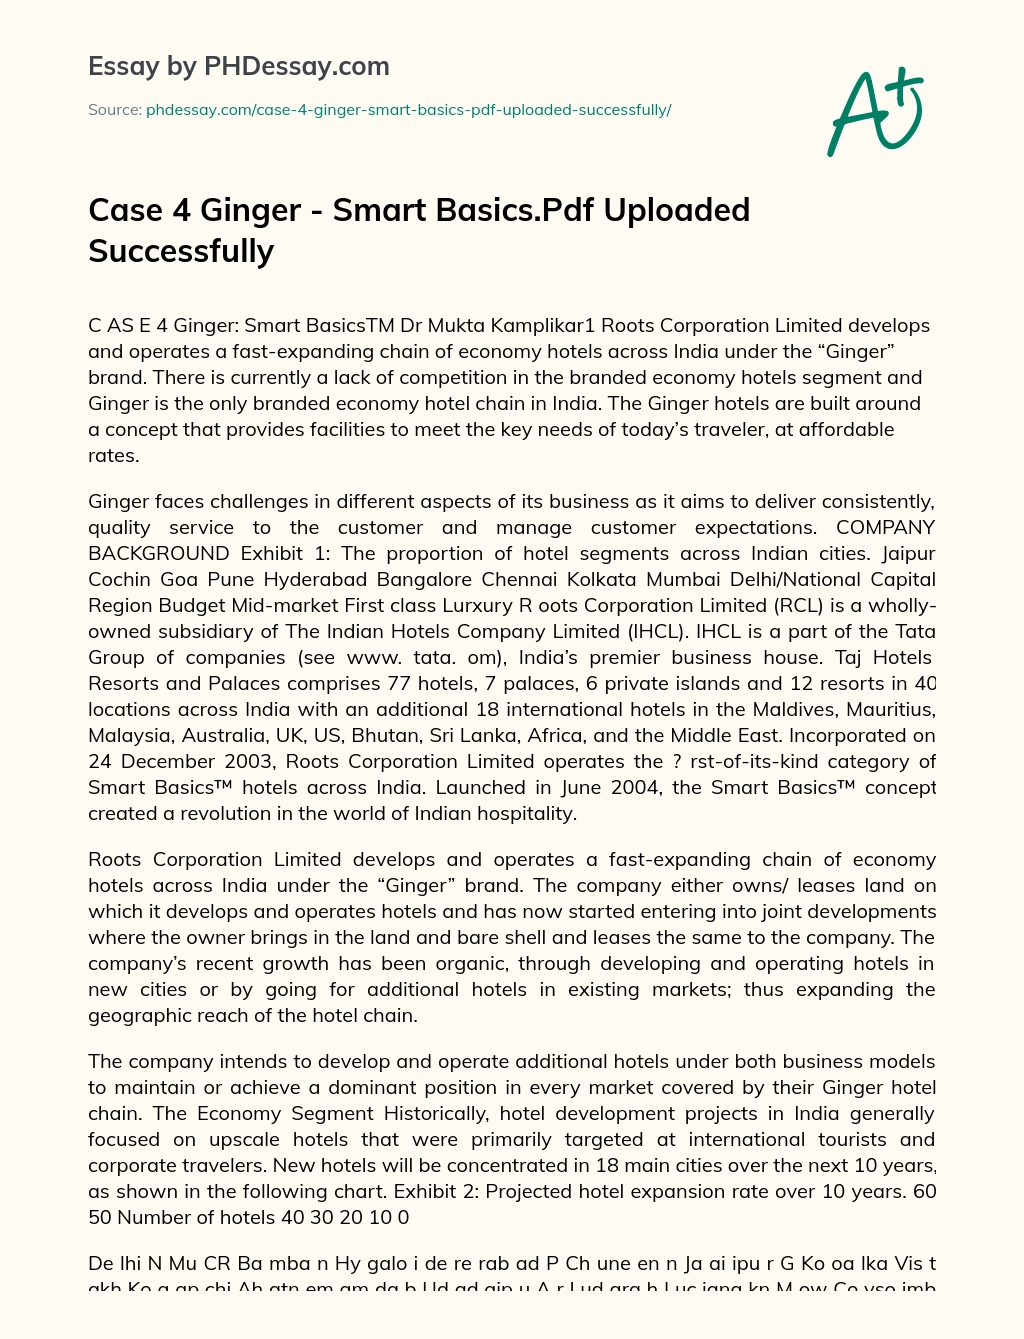 Case 4 Ginger – Smart Basics.Pdf Uploaded Successfully essay